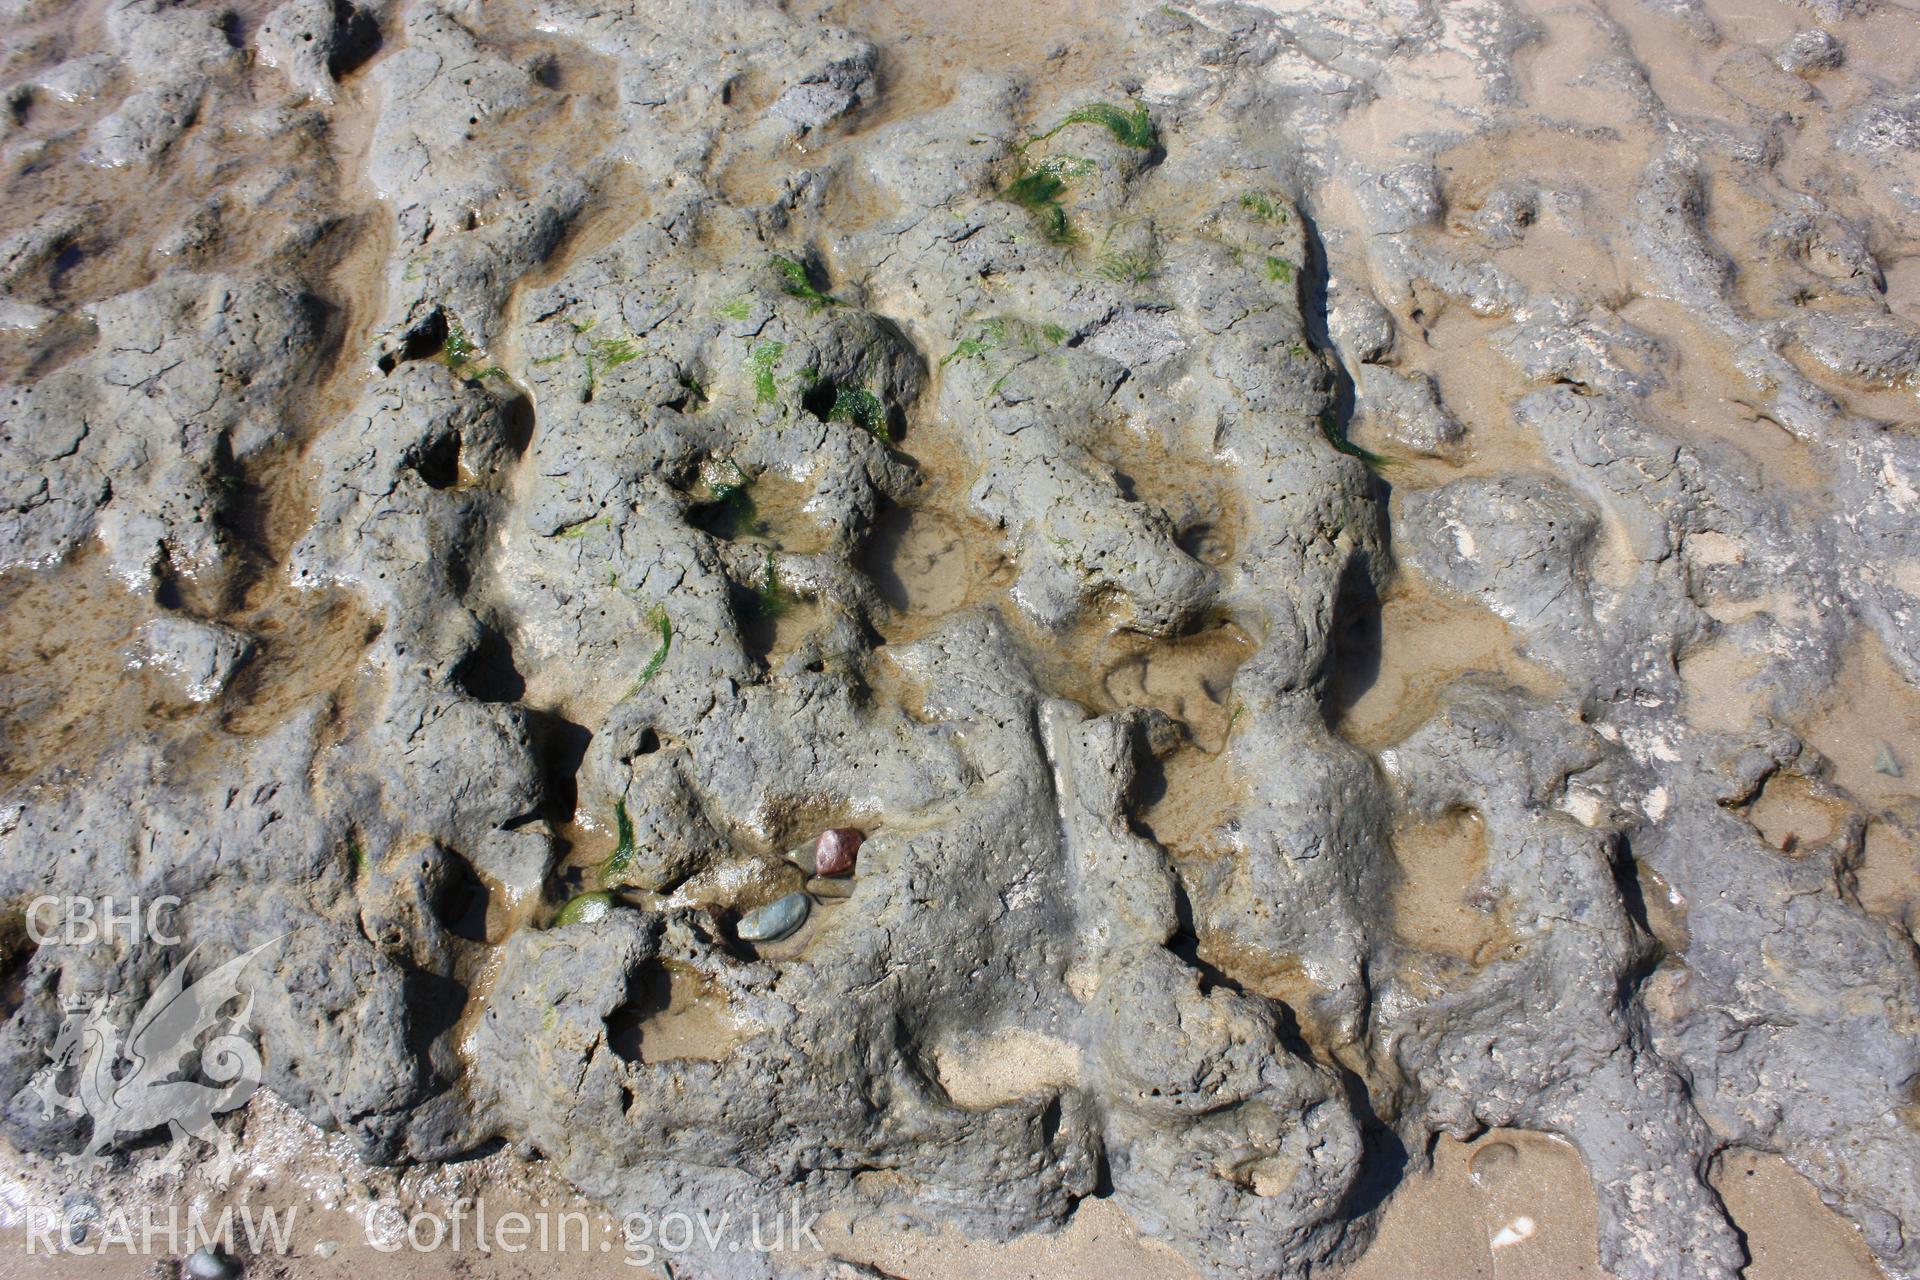 Peat pavement with animal footprints (?)